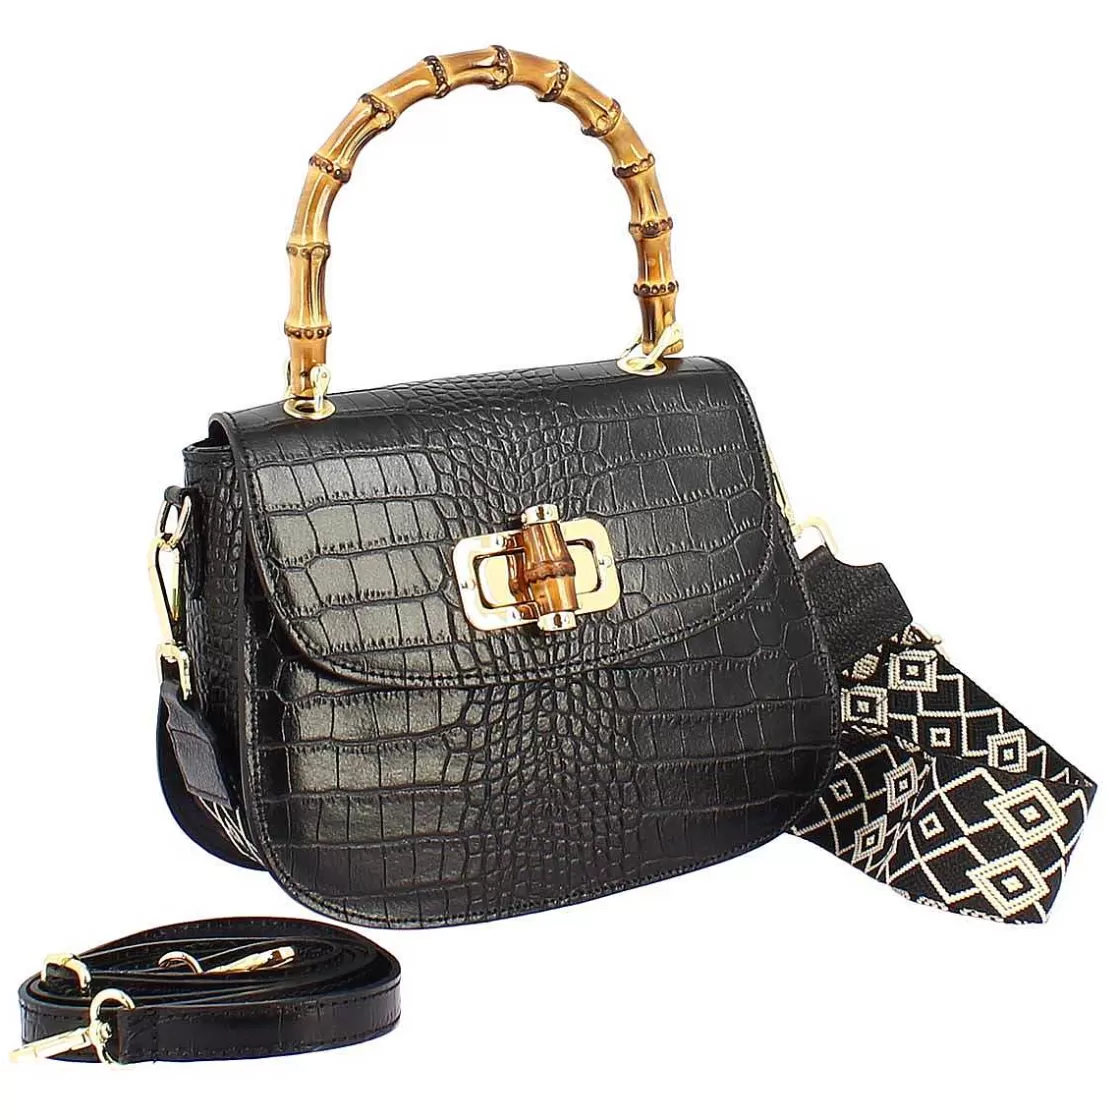 Leonardo Handmade Women'S Handbag In Black Leather With Removable Shoulder Strap Discount